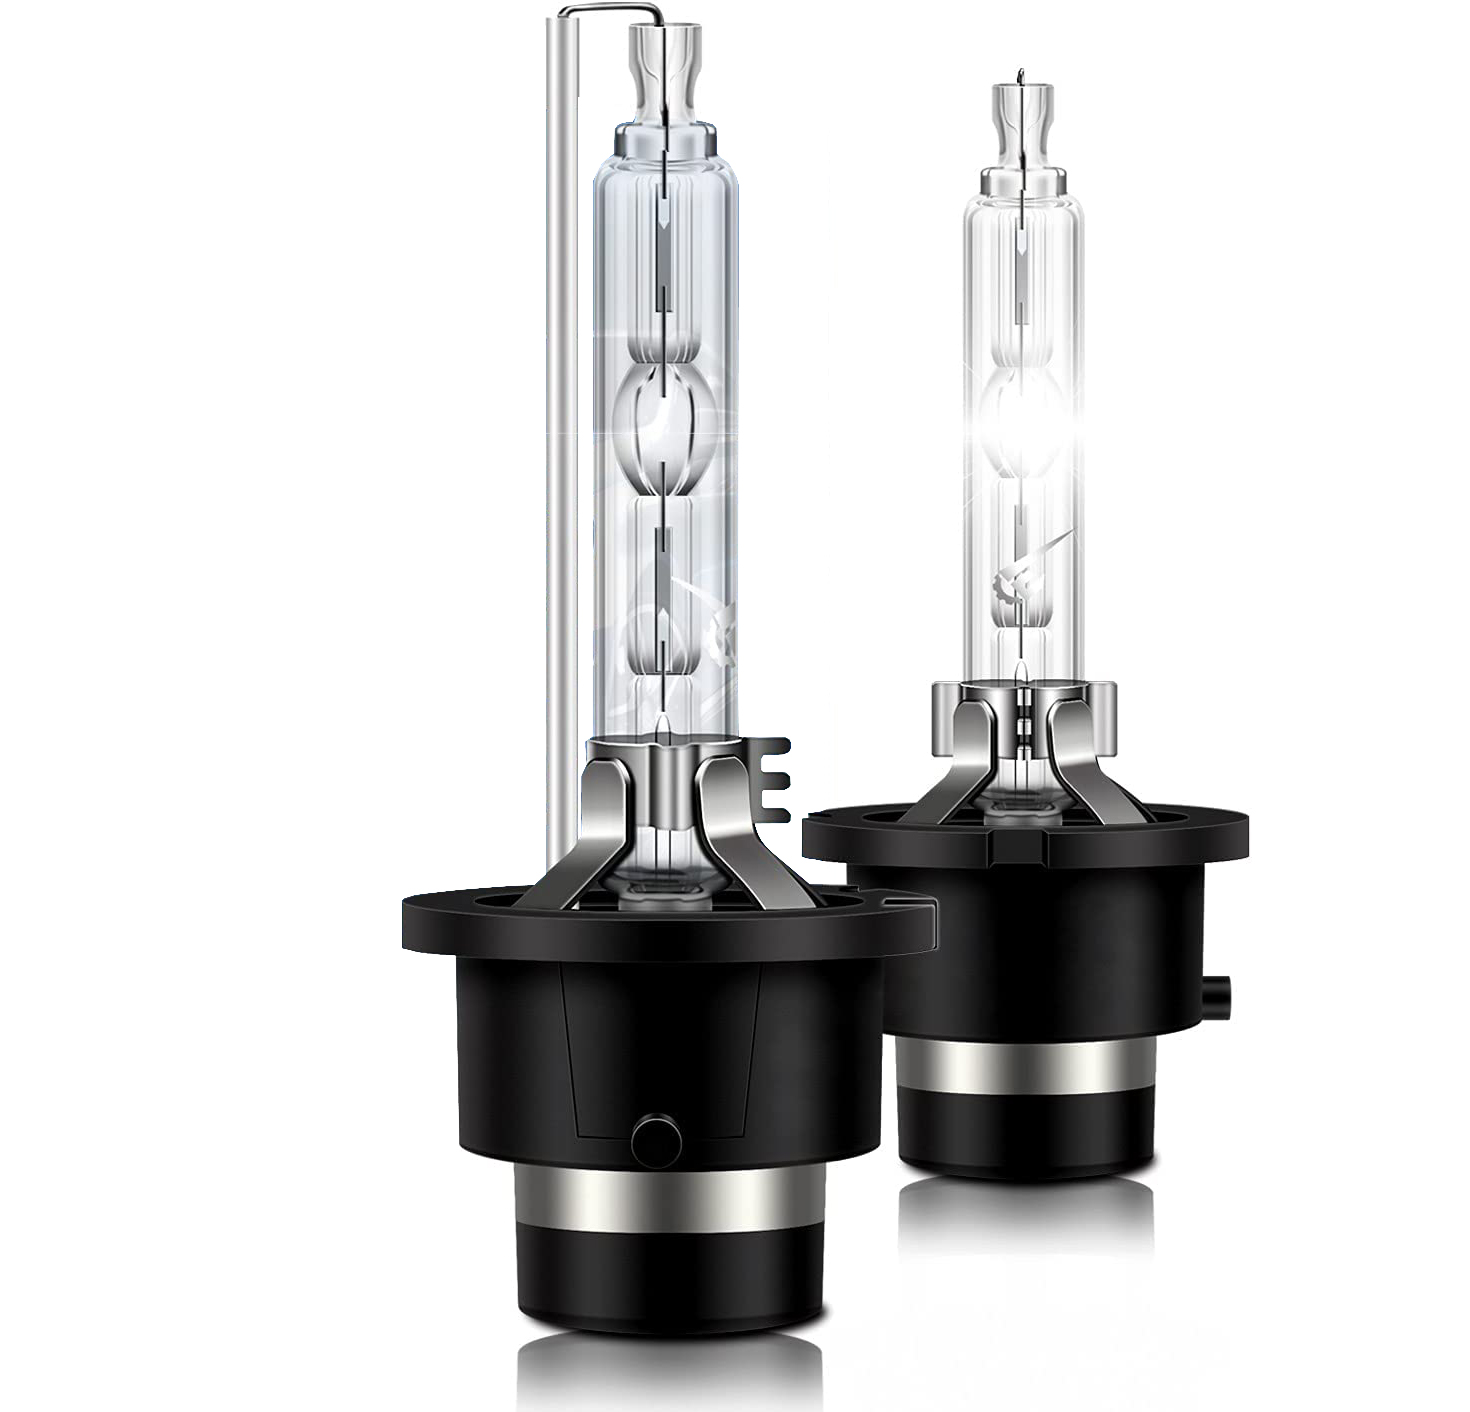 D2R HID Xenon Bulb 2 Replacement Bulbs for Headlight 35w Lamp Light UK 6000k White 